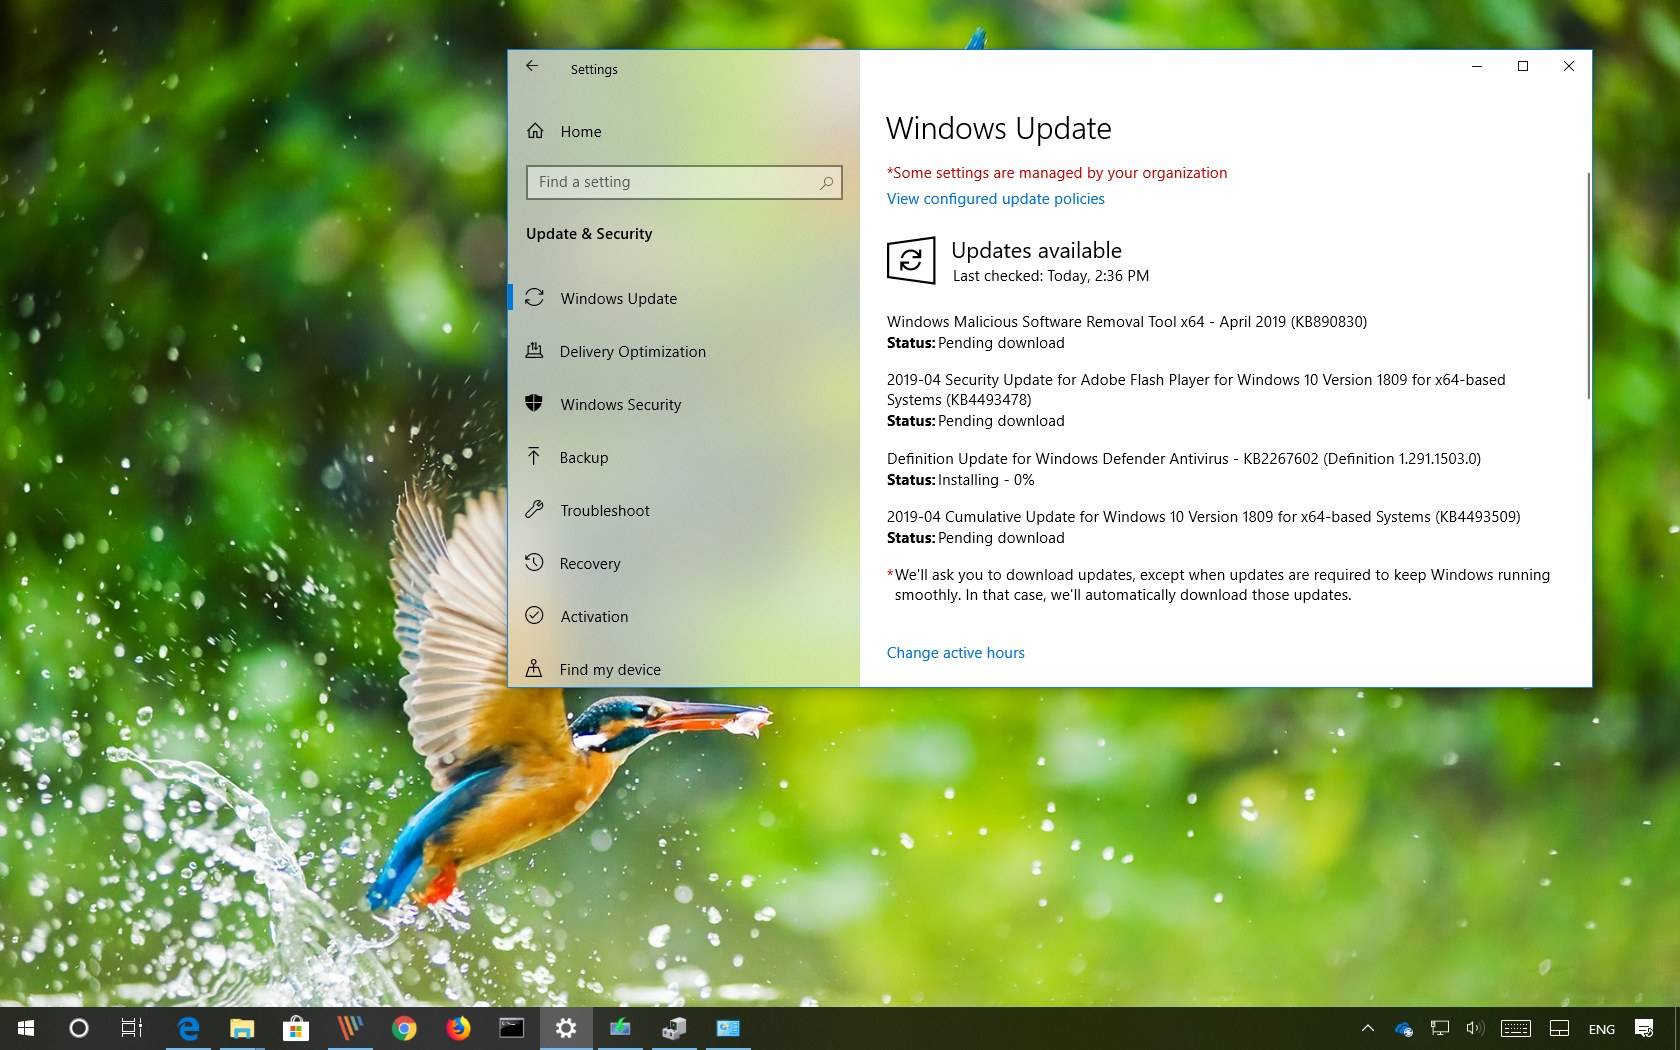 KB4493509 update for Windows 10 version 1809